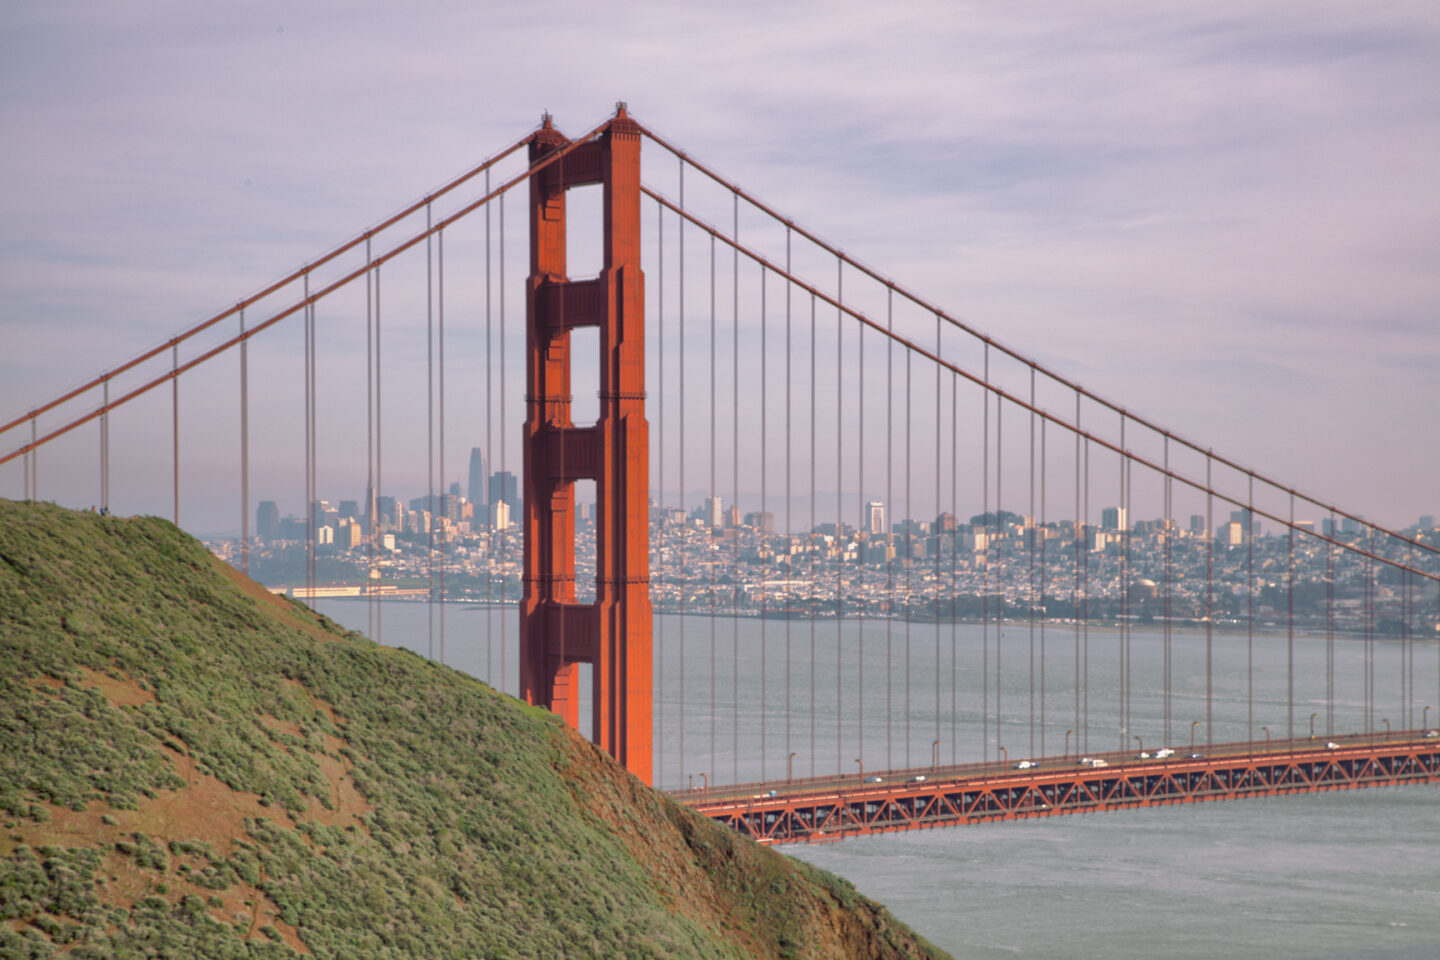 Golden Gate Bridge, San Francisco, California as photographed by Carol Schiraldi of Carol's Little World 